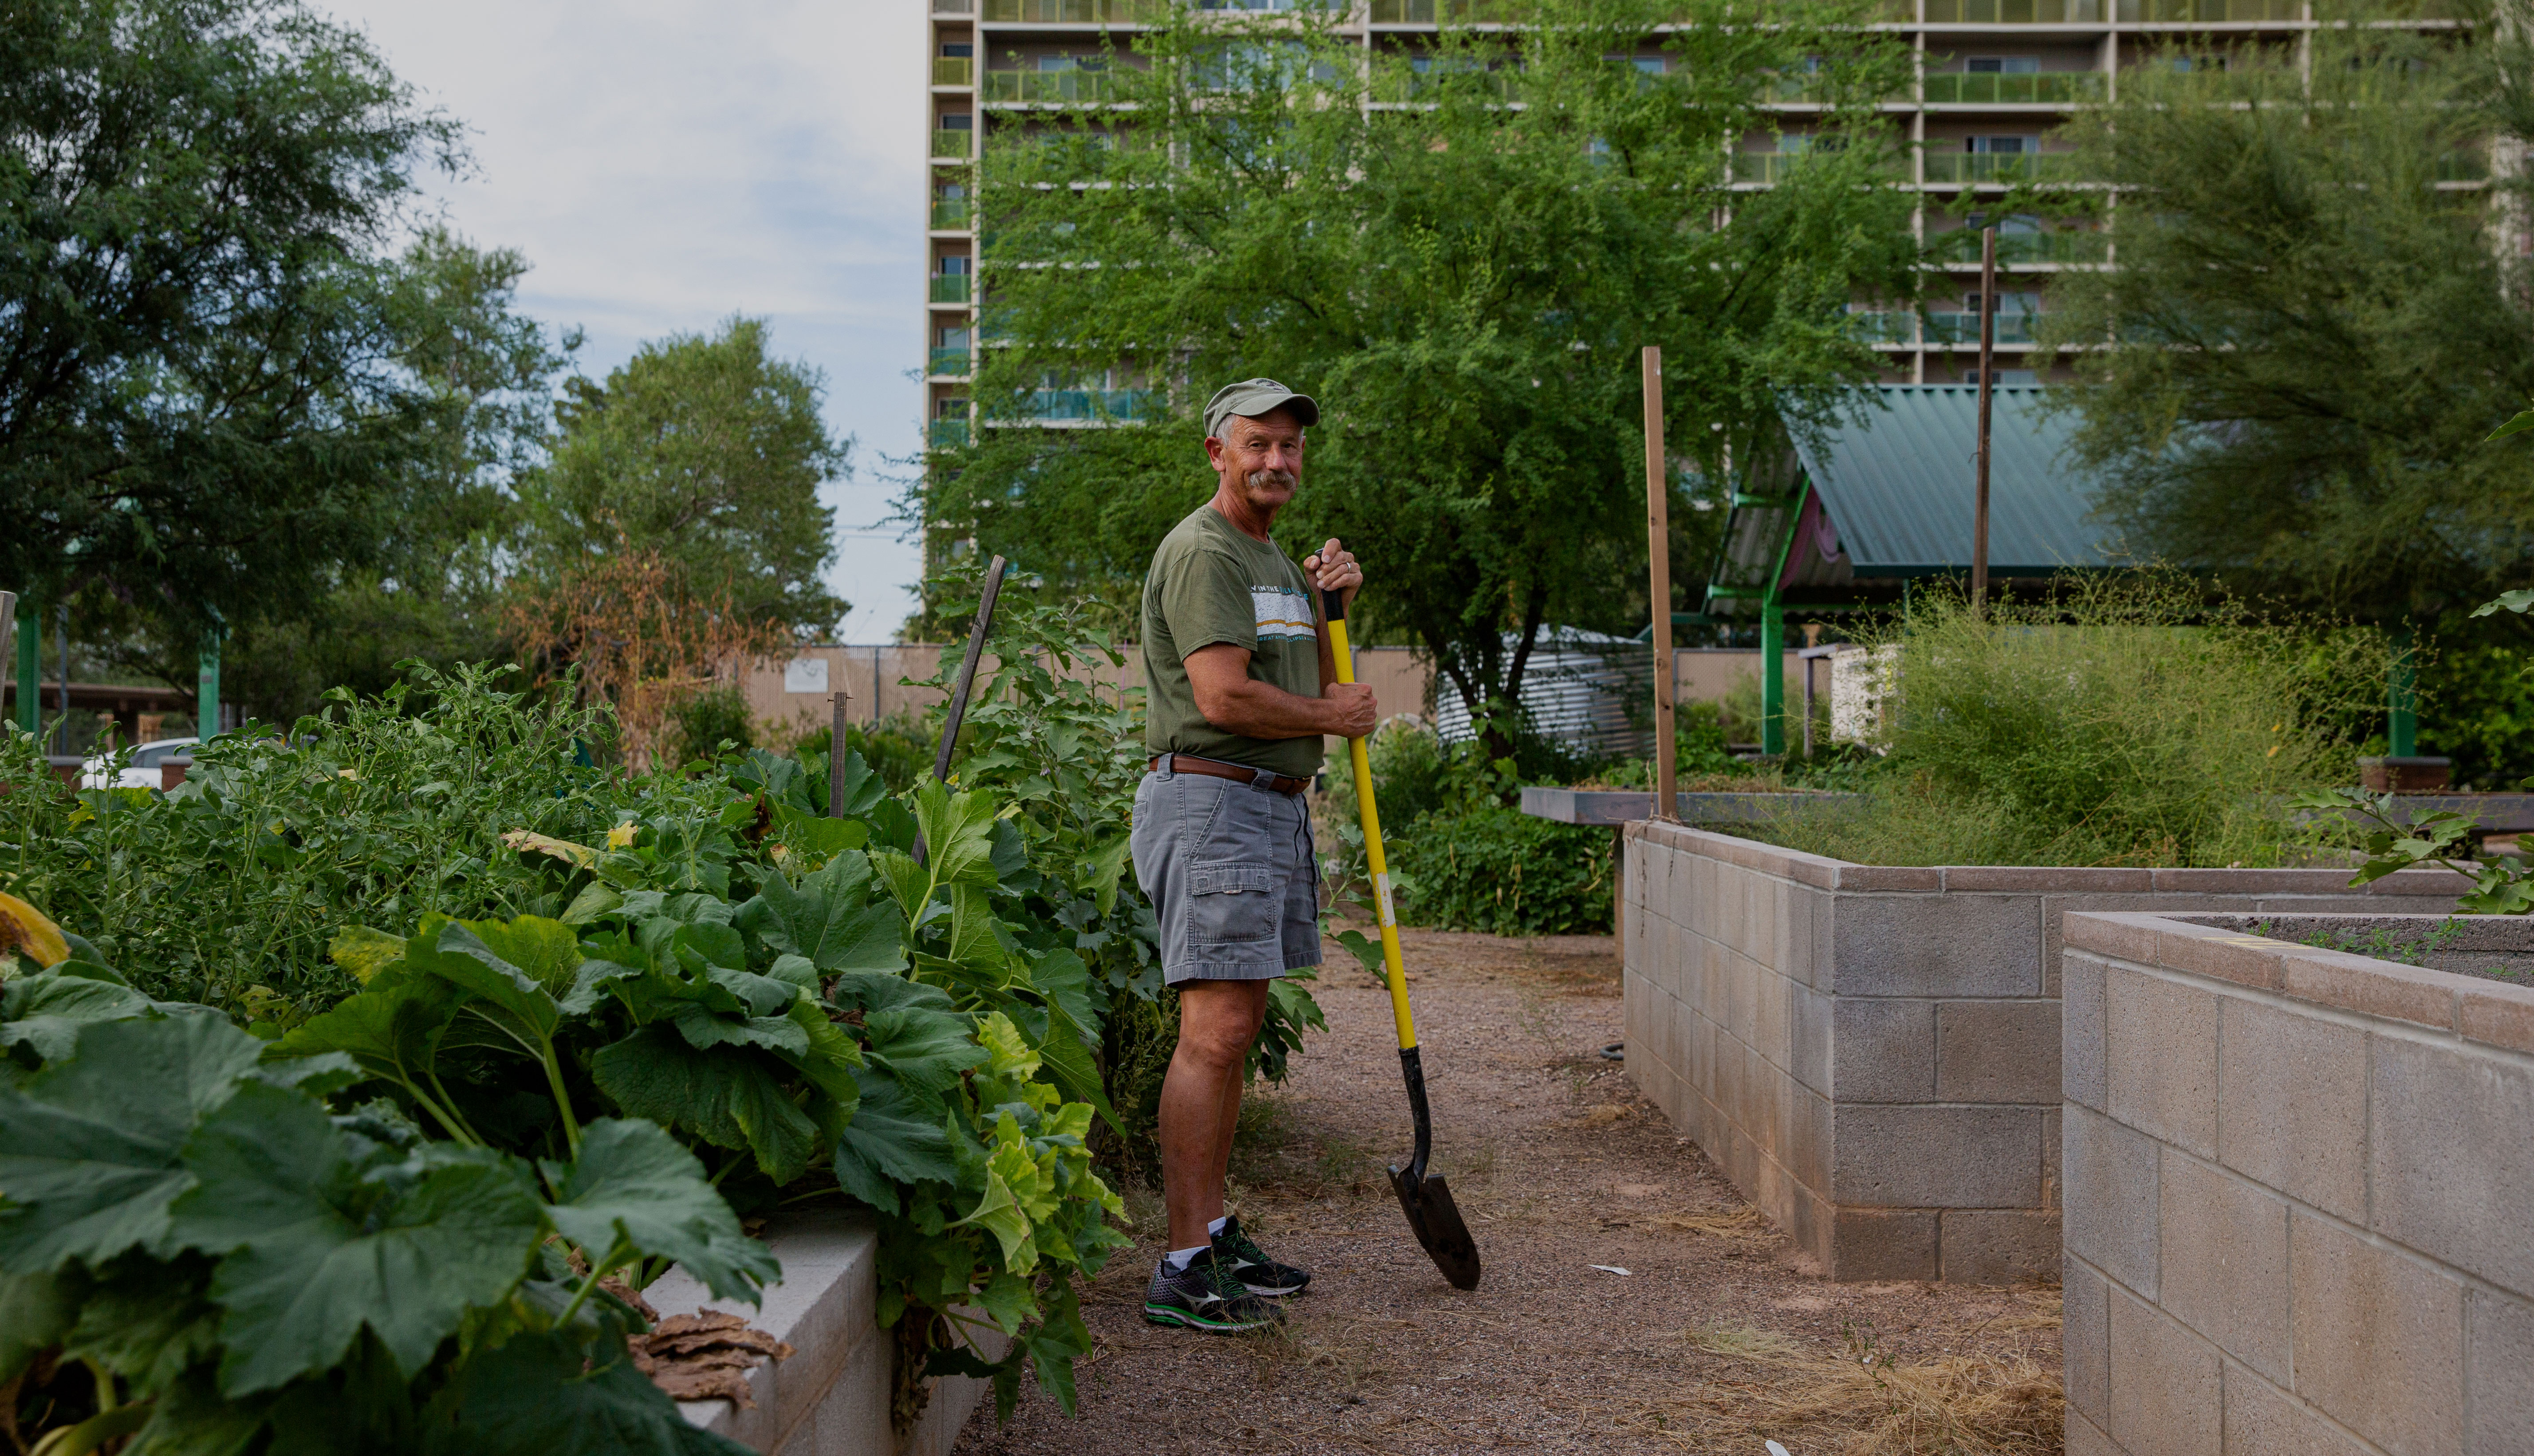 A man working in a community garden